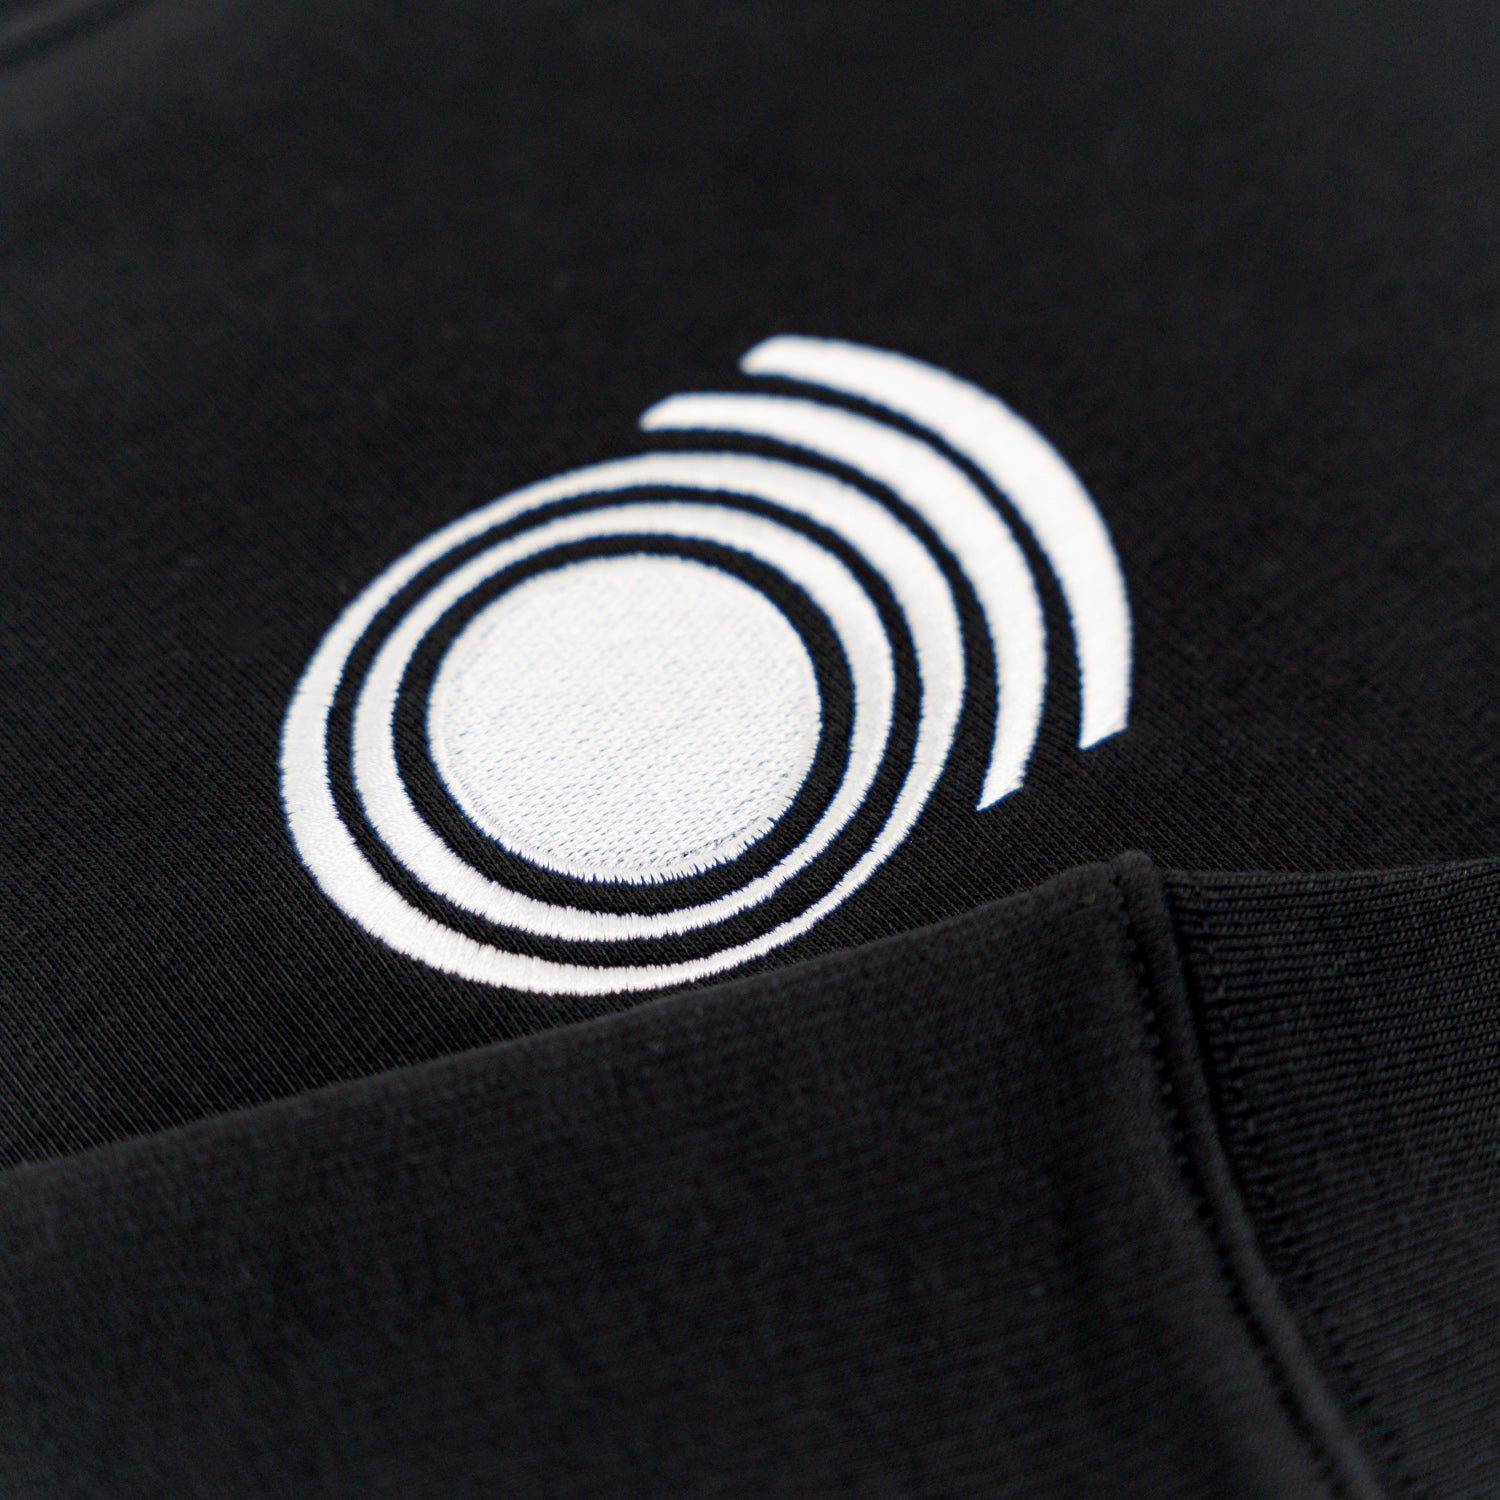 SUNN O))) "Embroidered Logo - White On Black" Crewneck